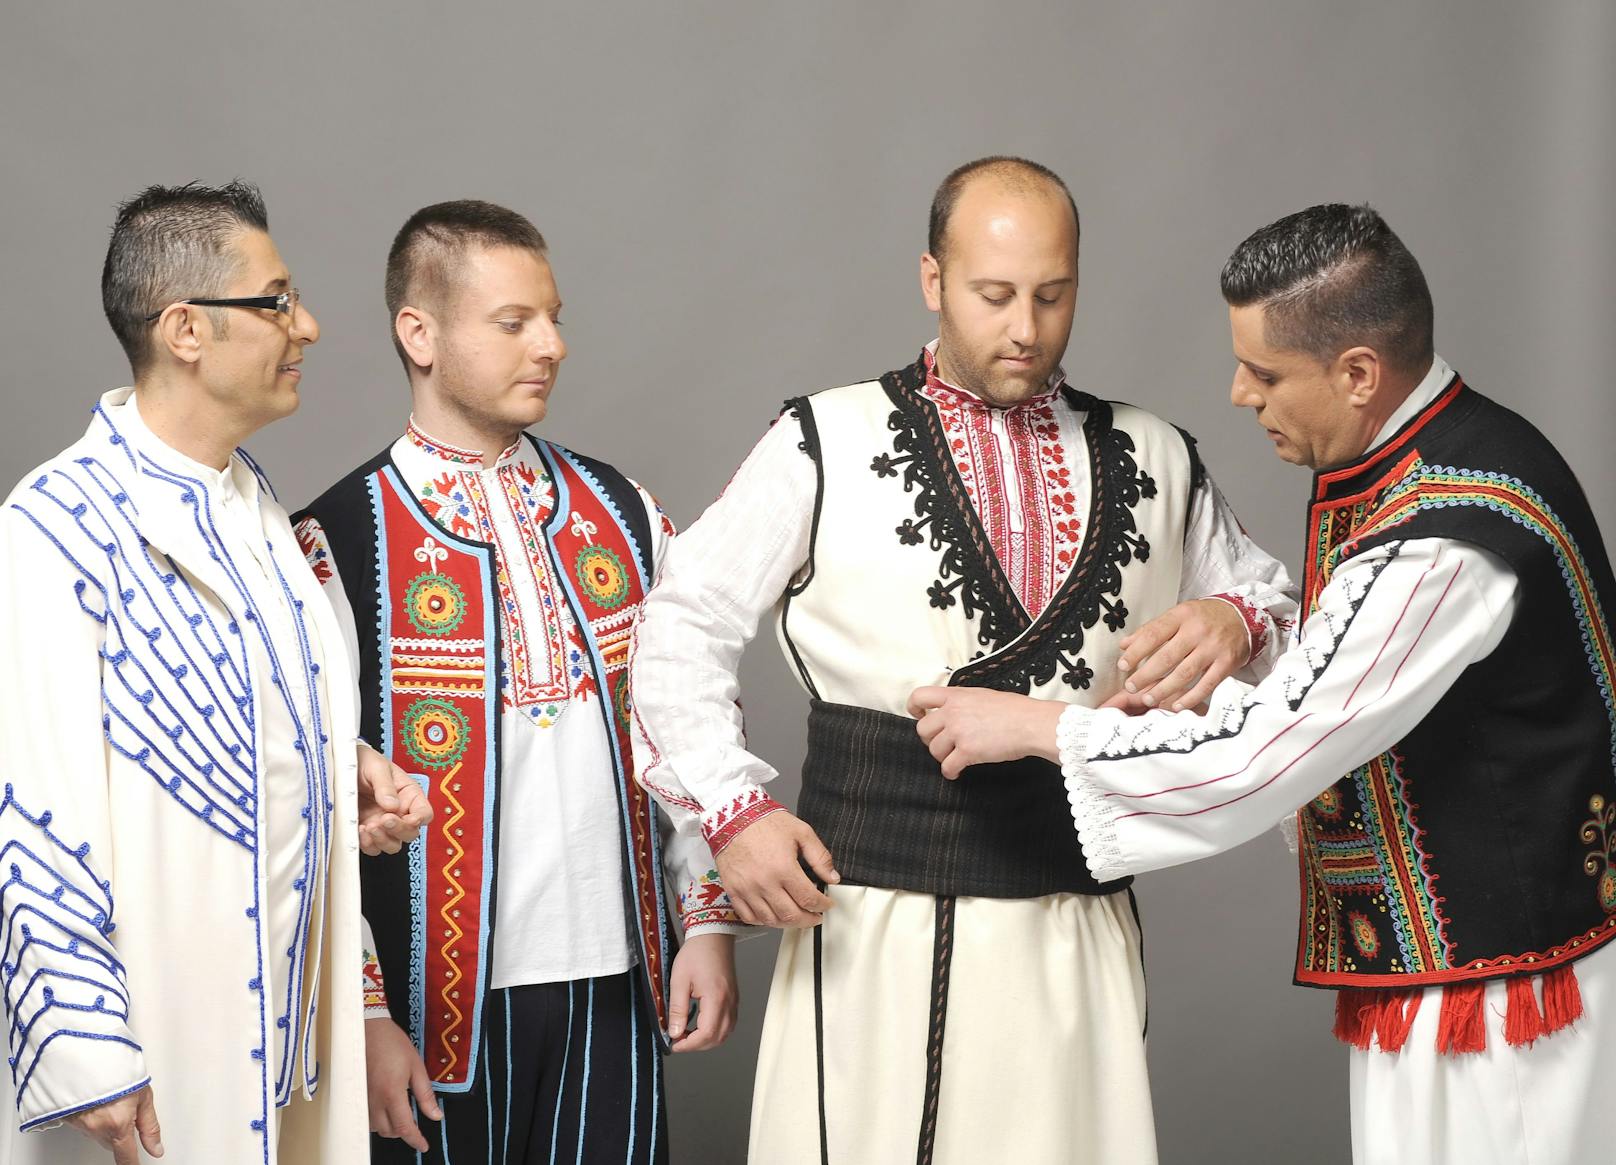 Svetoglas aus Bulgarien singen zum Festivalauftakt am 3. November